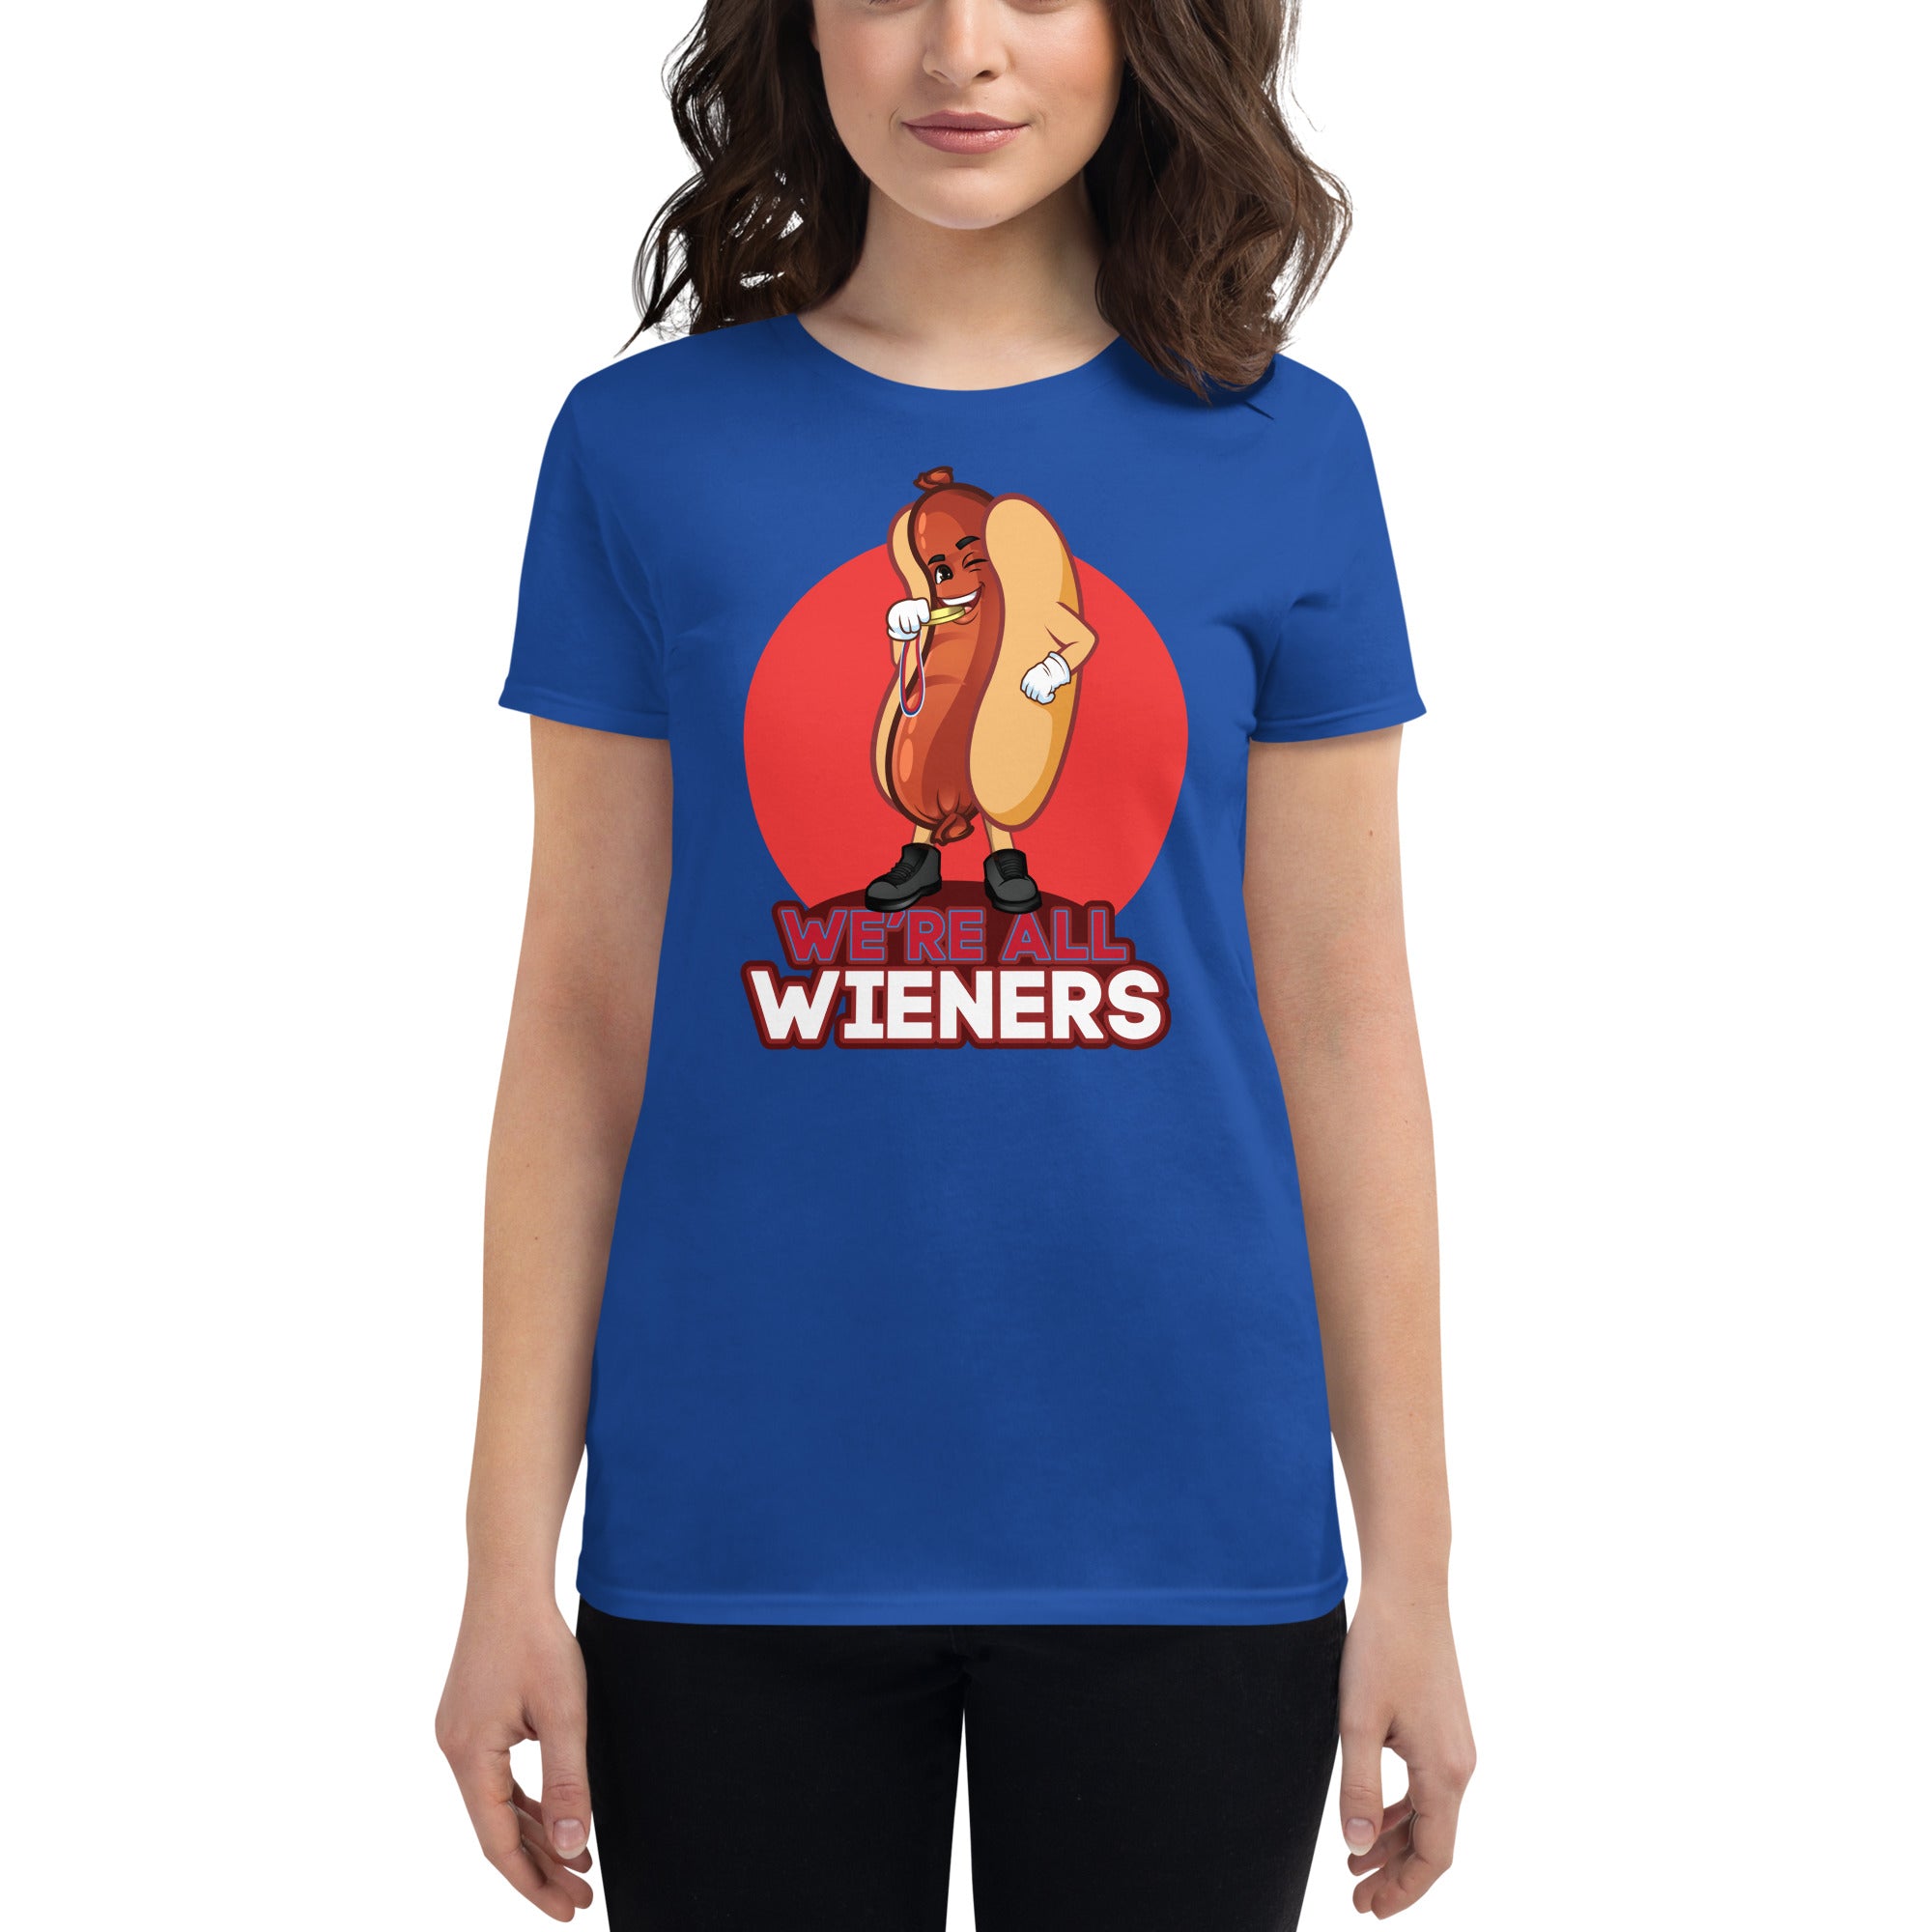 We're All Wiener's Women's Classic T-Shirt - Red